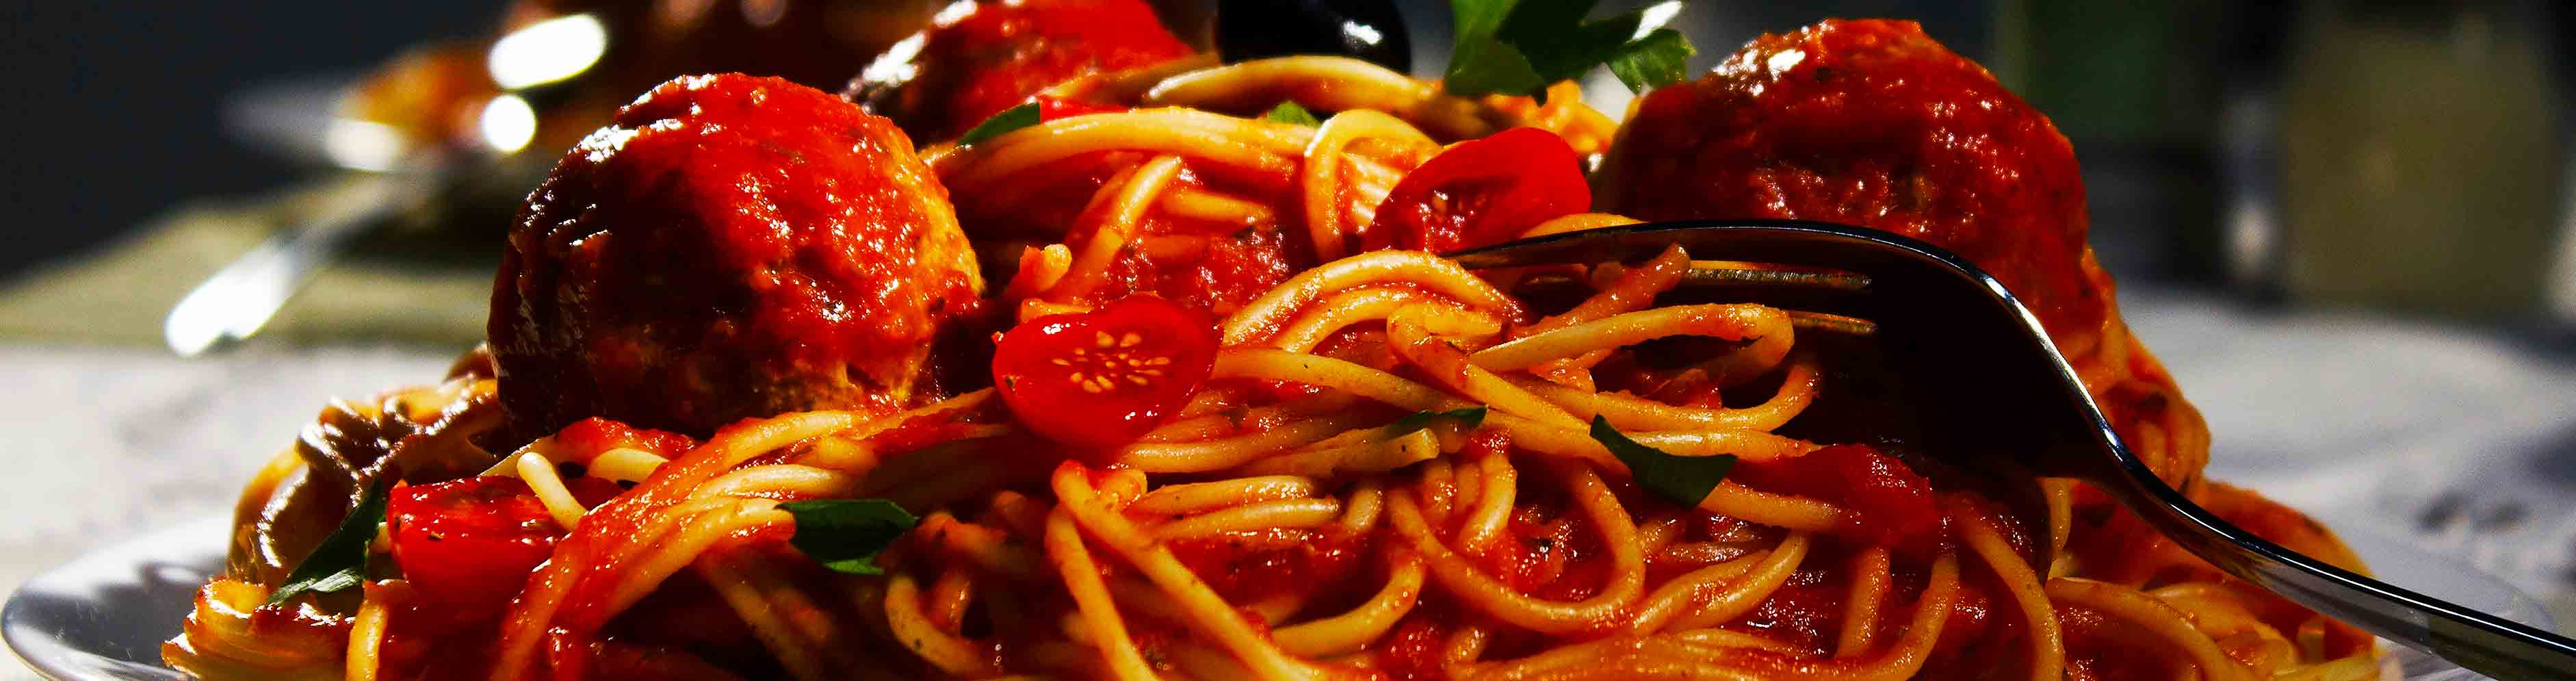 Spaghetti dinner at Pasta Amore